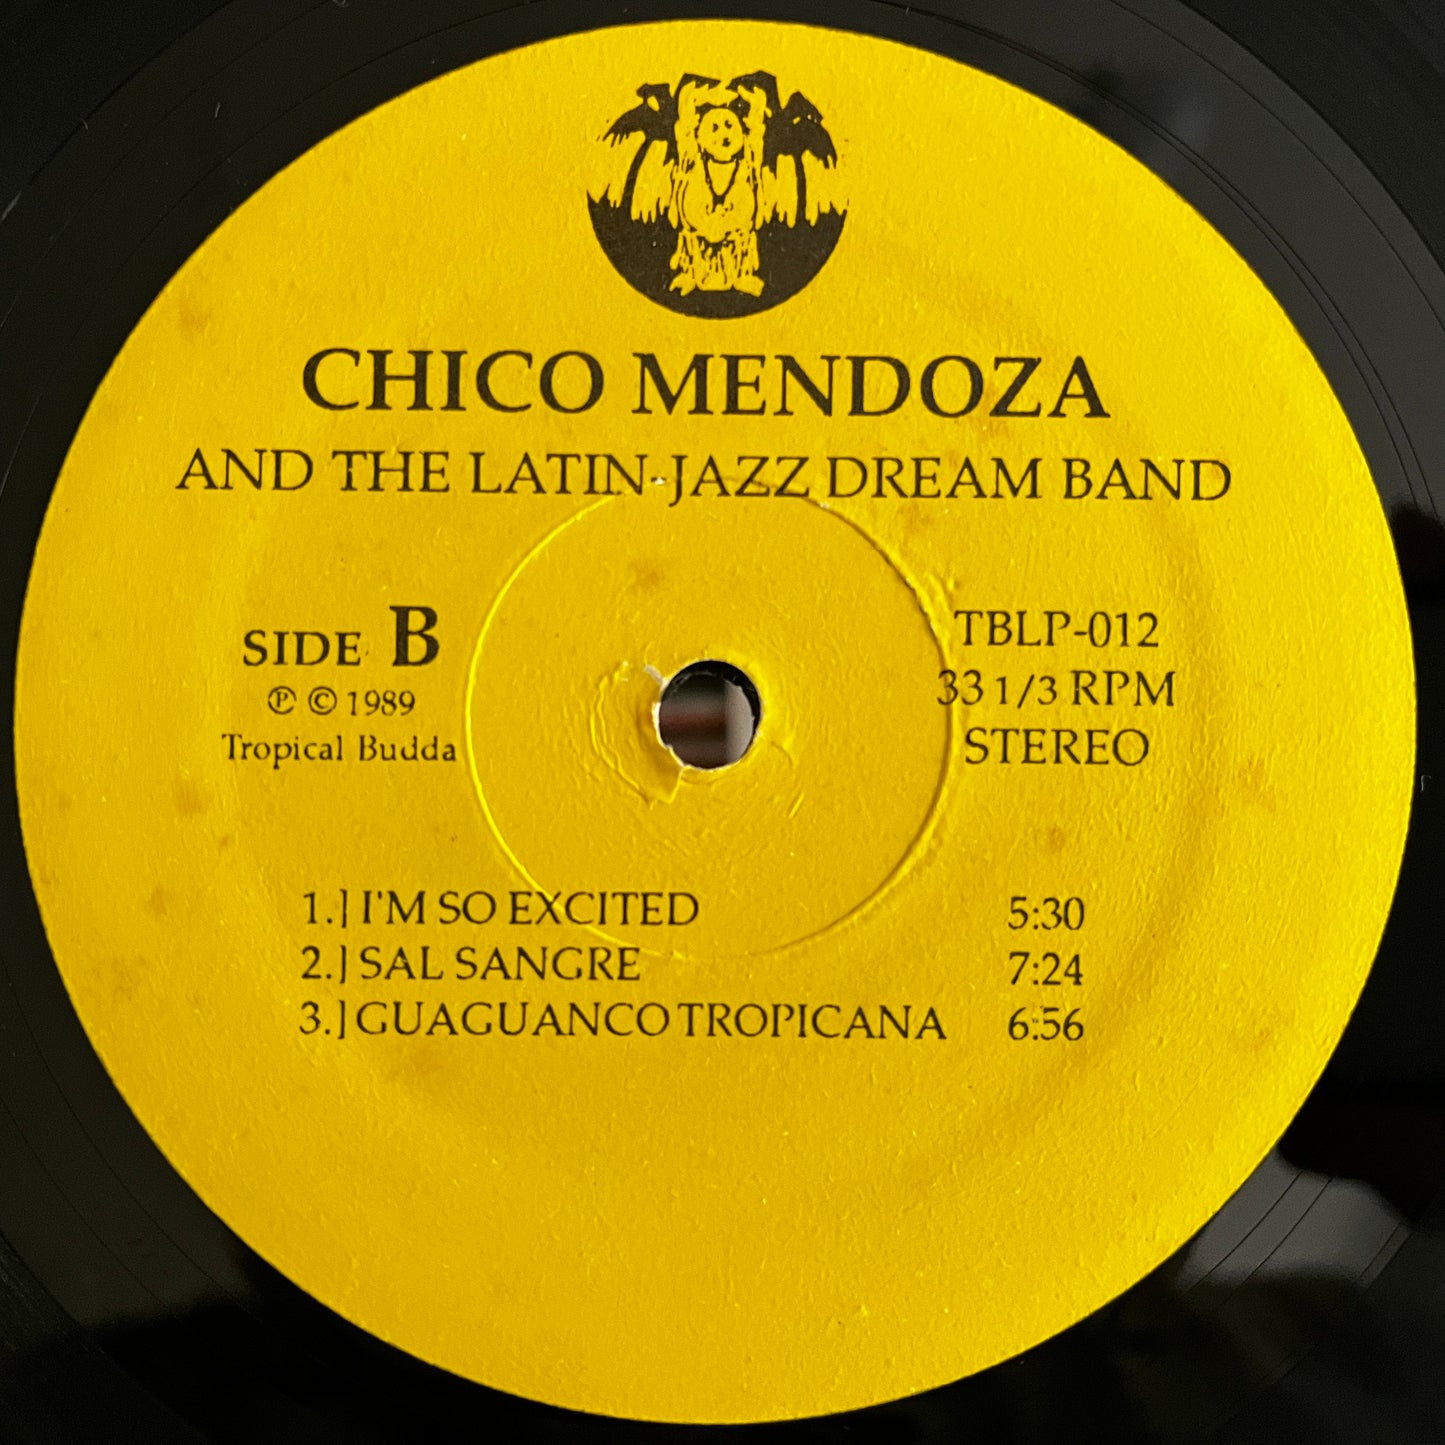 Chico Mendoza And The Latin-Jazz Dream Band ‎– Chico Mendoza And The Latin-Jazz Dream Band